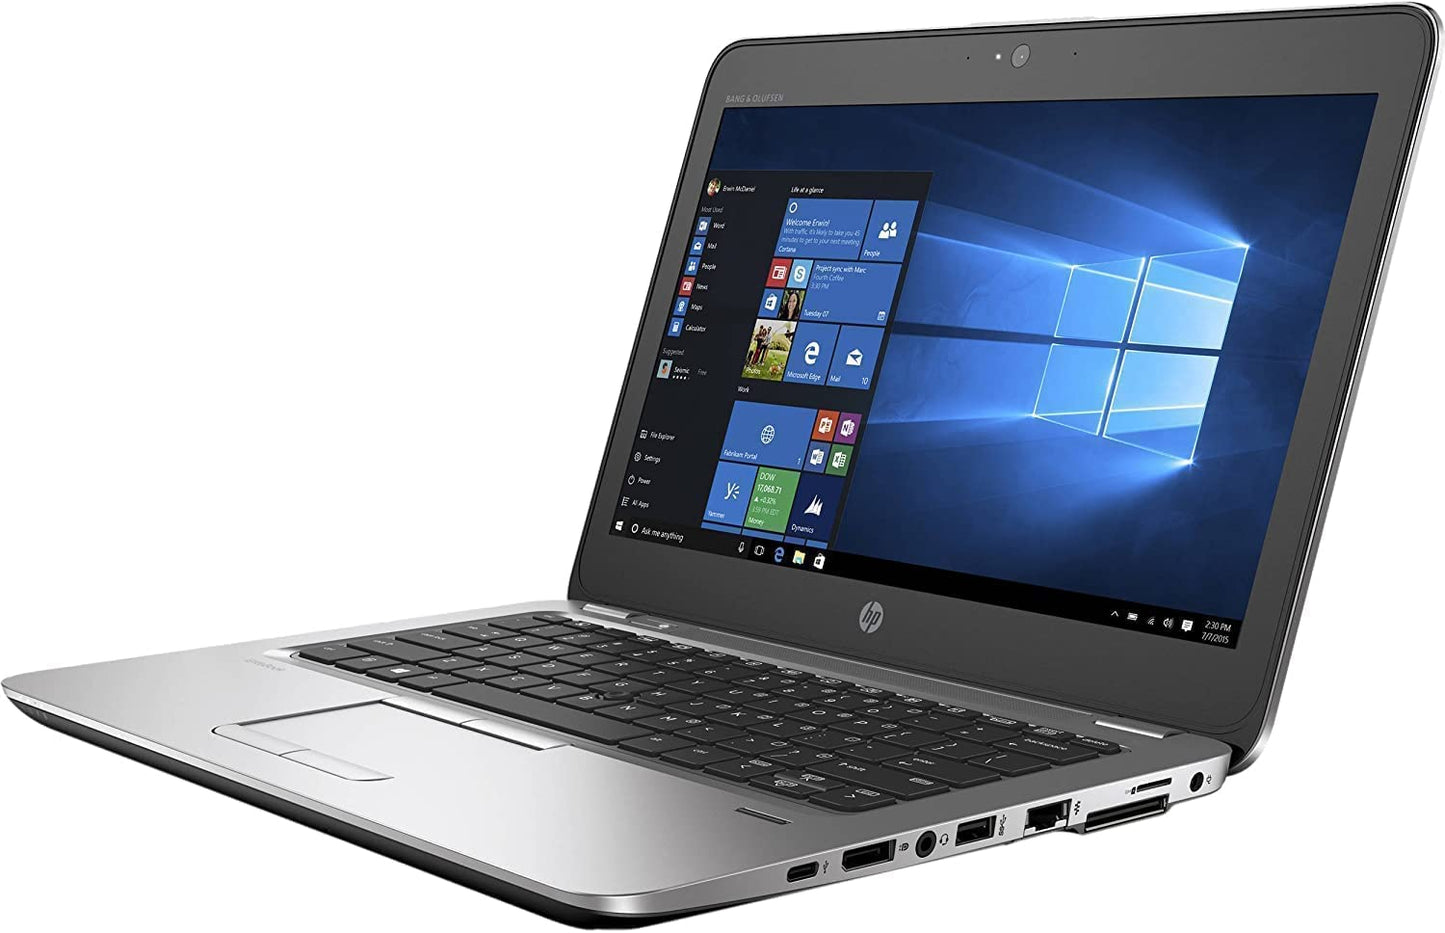 HP EliteBook 820 G3 Intel i7, 6th Gen Ultrabook Laptop with 16GB Ram - Refurbished